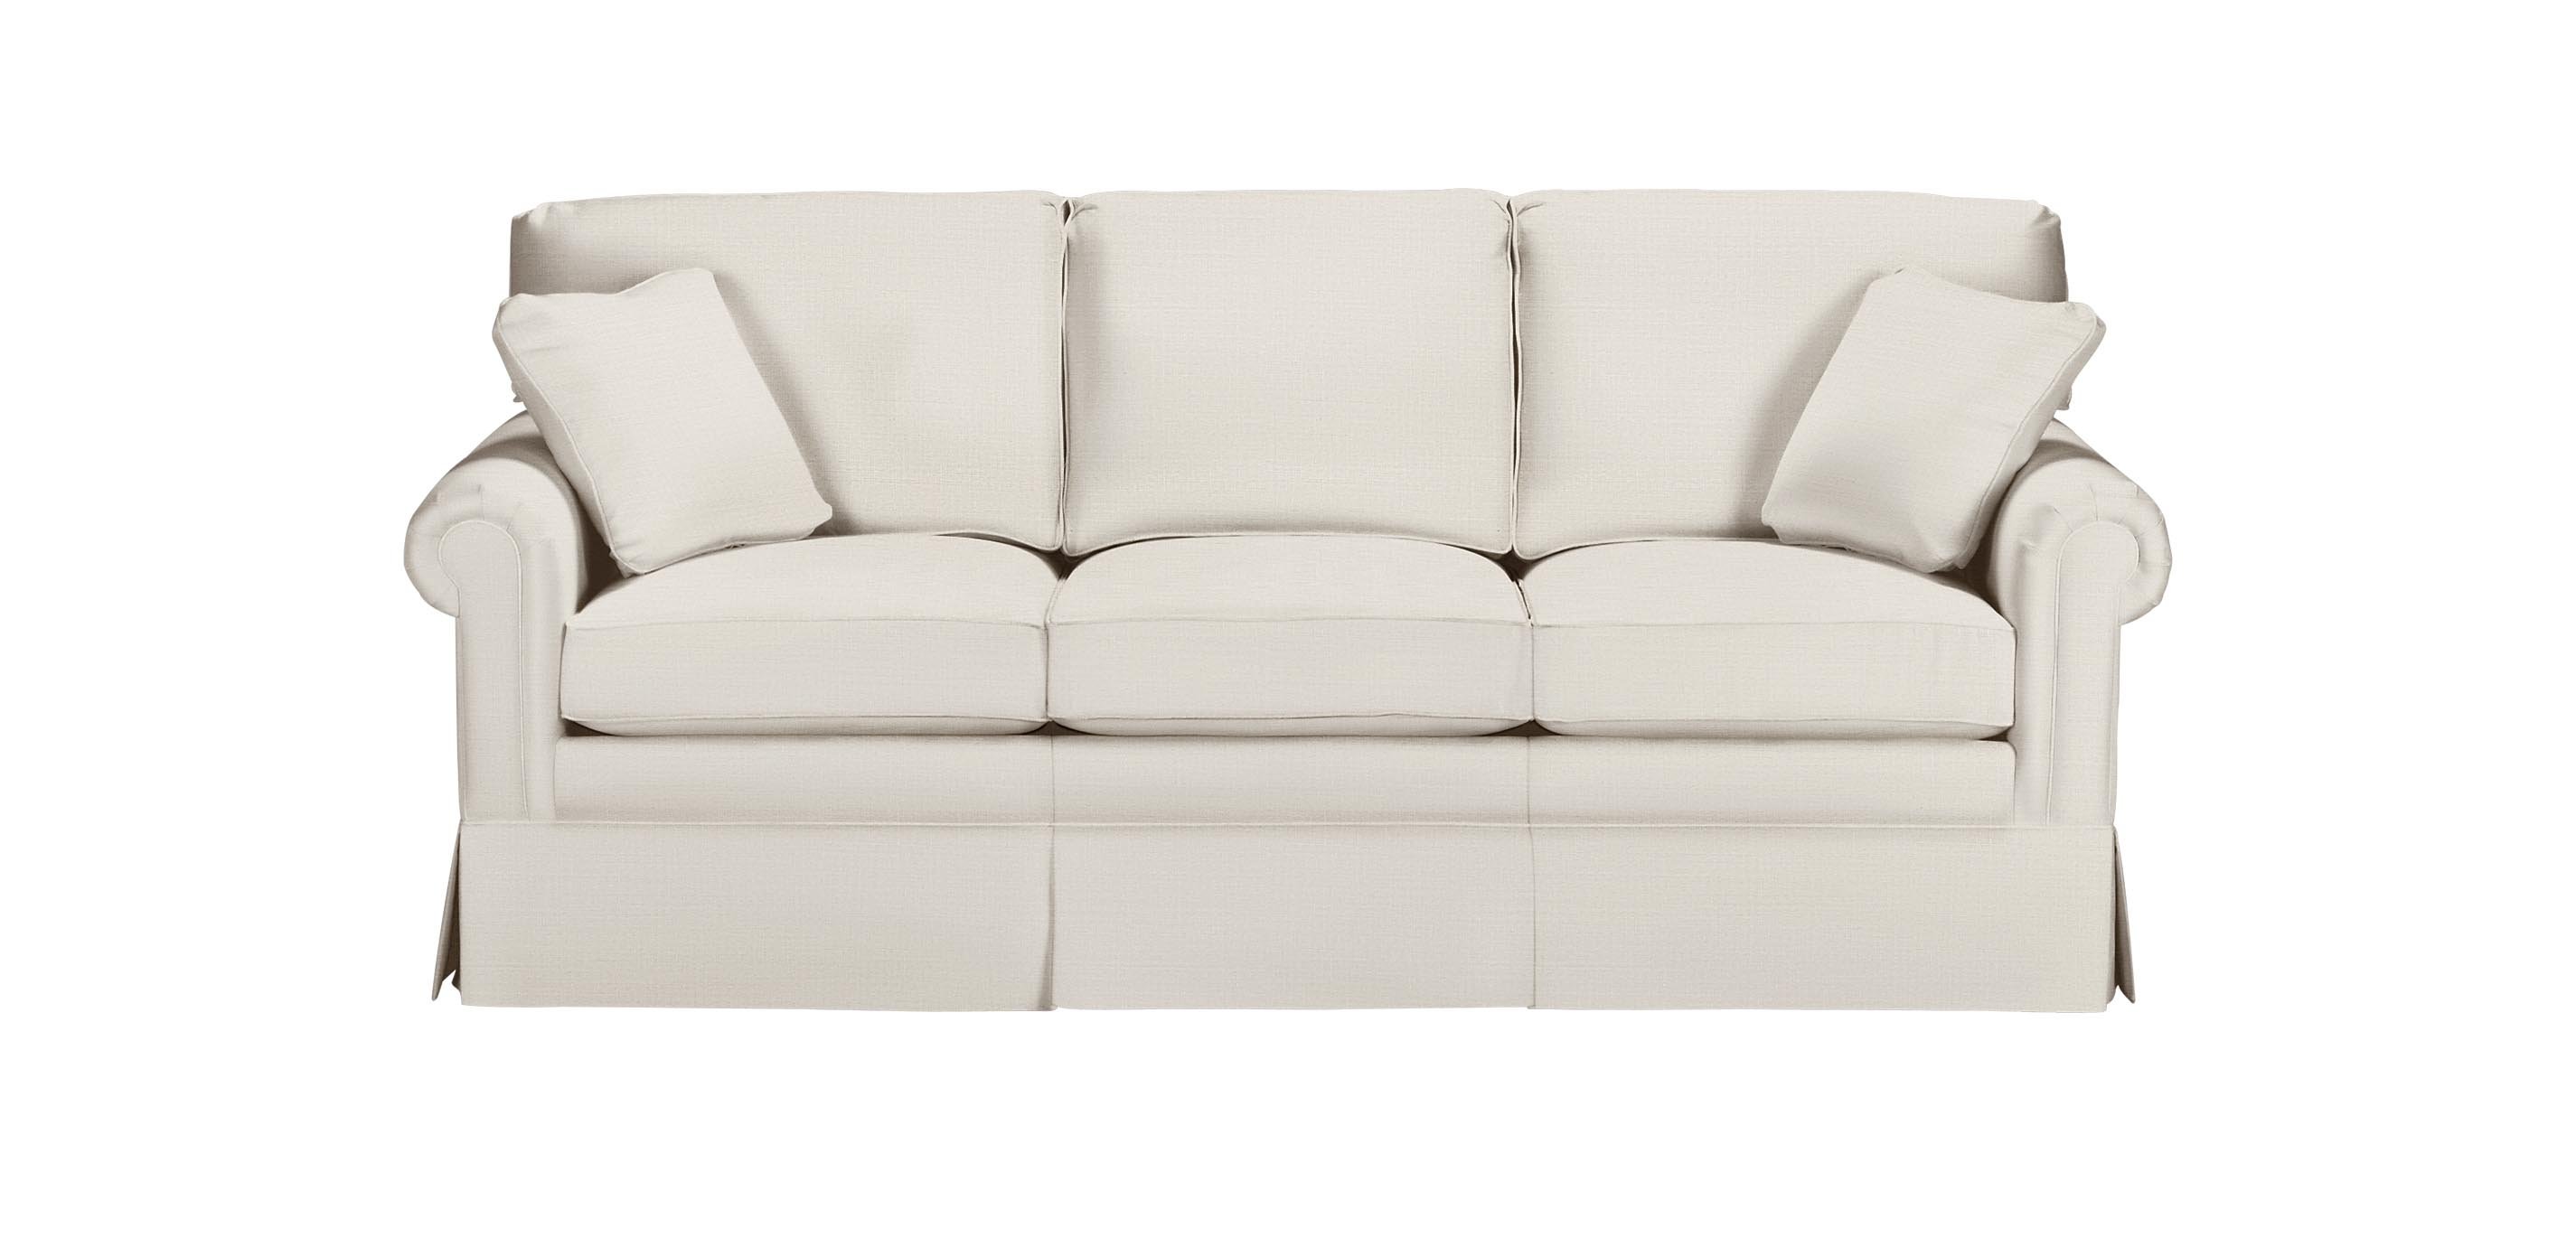 Panel-Arm Sofa | Ethan Allen